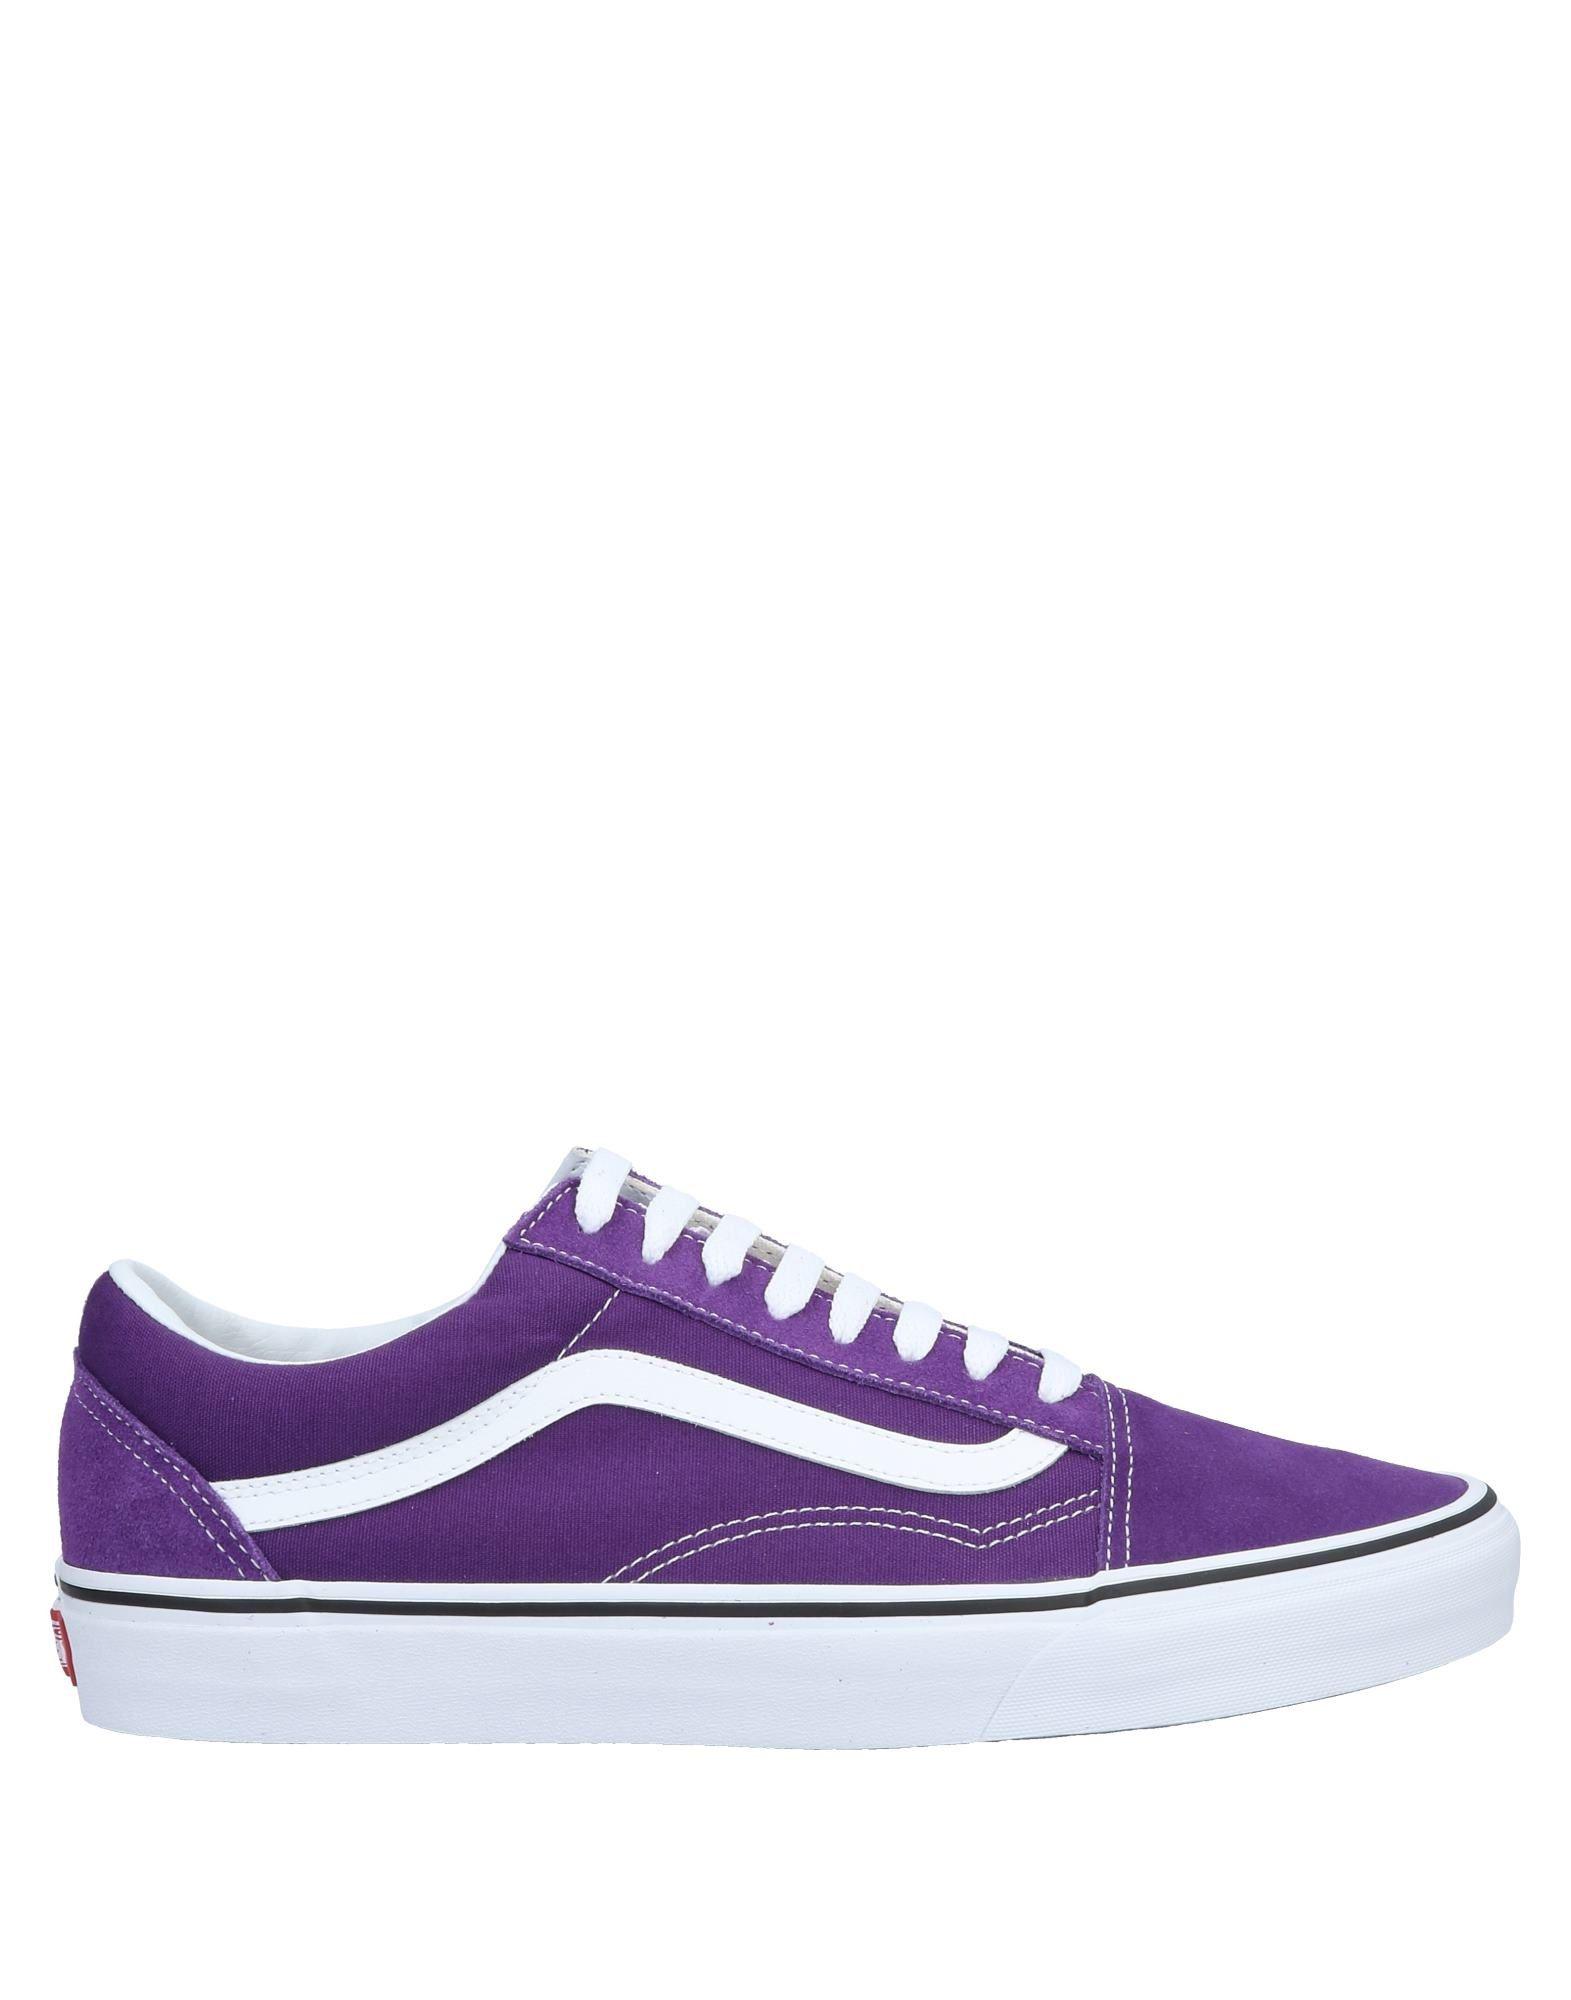 Vans Canvas Violet Skool Shoes in Purple for Men - Lyst